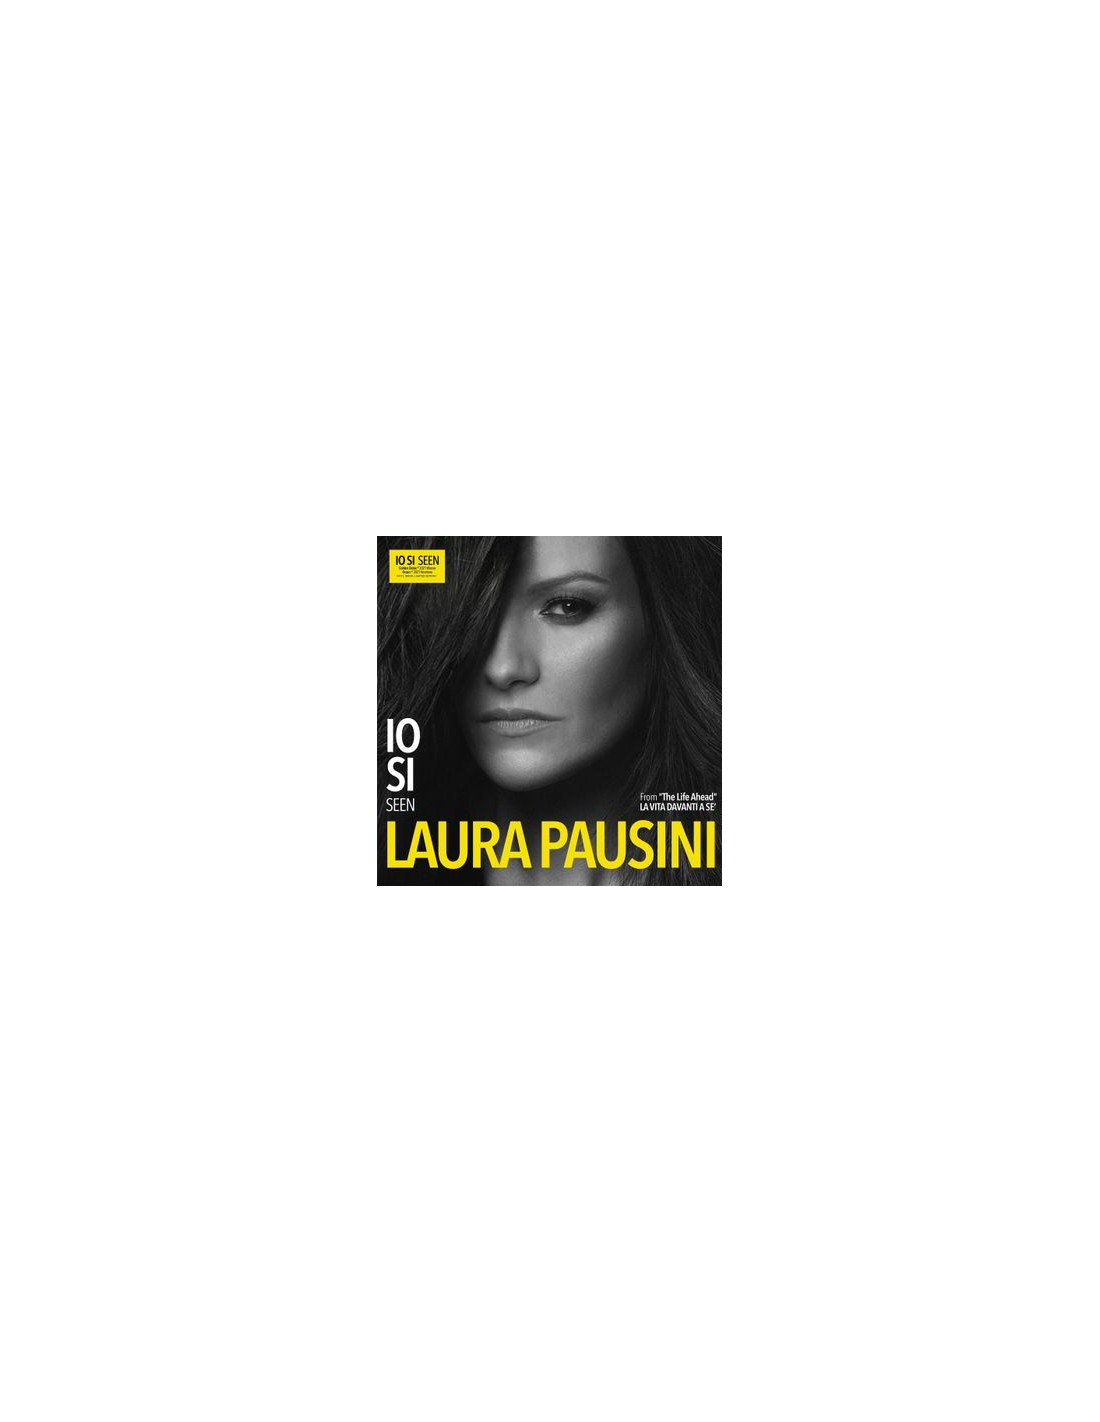 Laura Pausini Io Si Seen VINILE